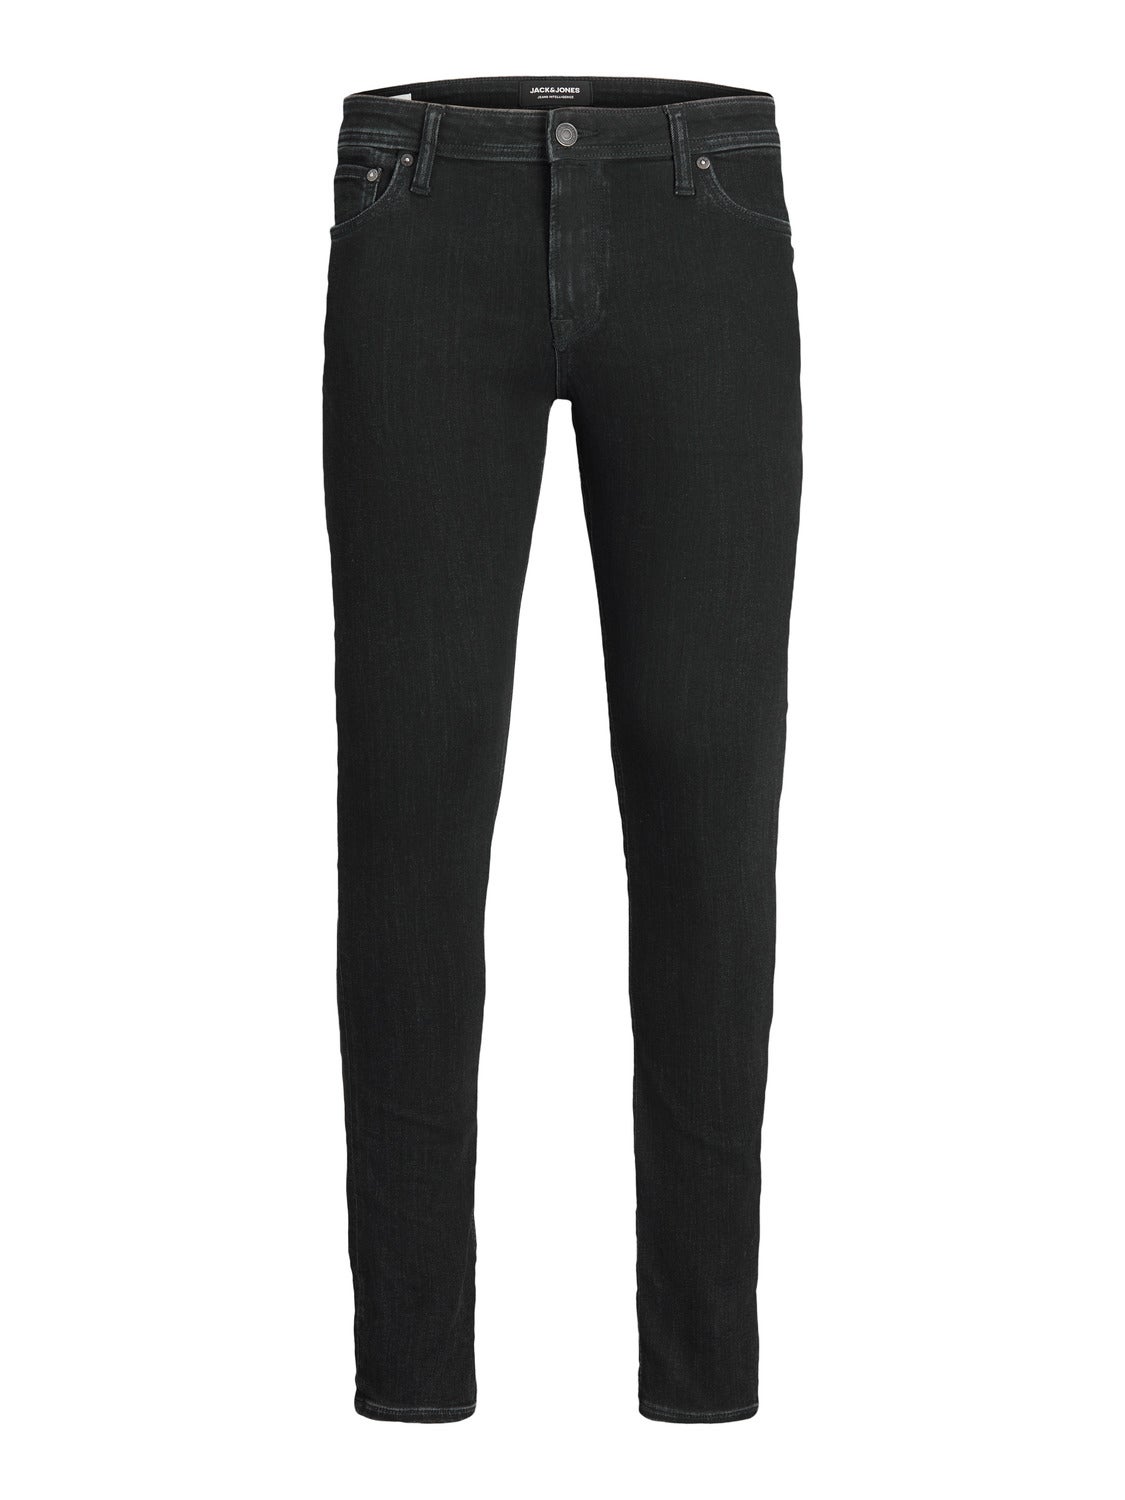 Jack jones jeans, Size 33Wx31L | eBay